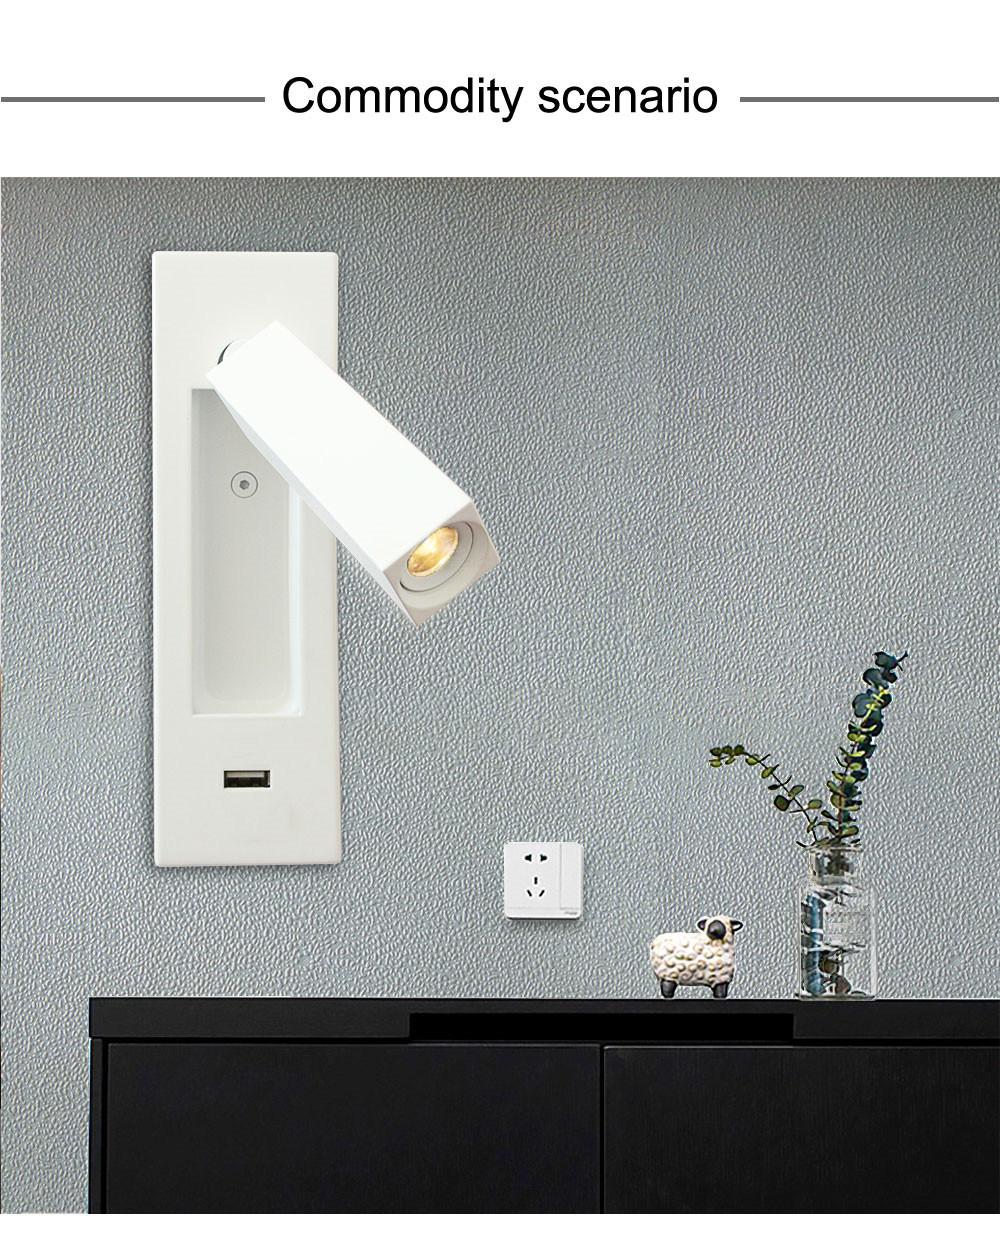 USB Wall Lamp for Bedroom Bedside Reading Lighting Ressessed Aluminum Wandlamp Sconces Fixtures Modern Book Lights